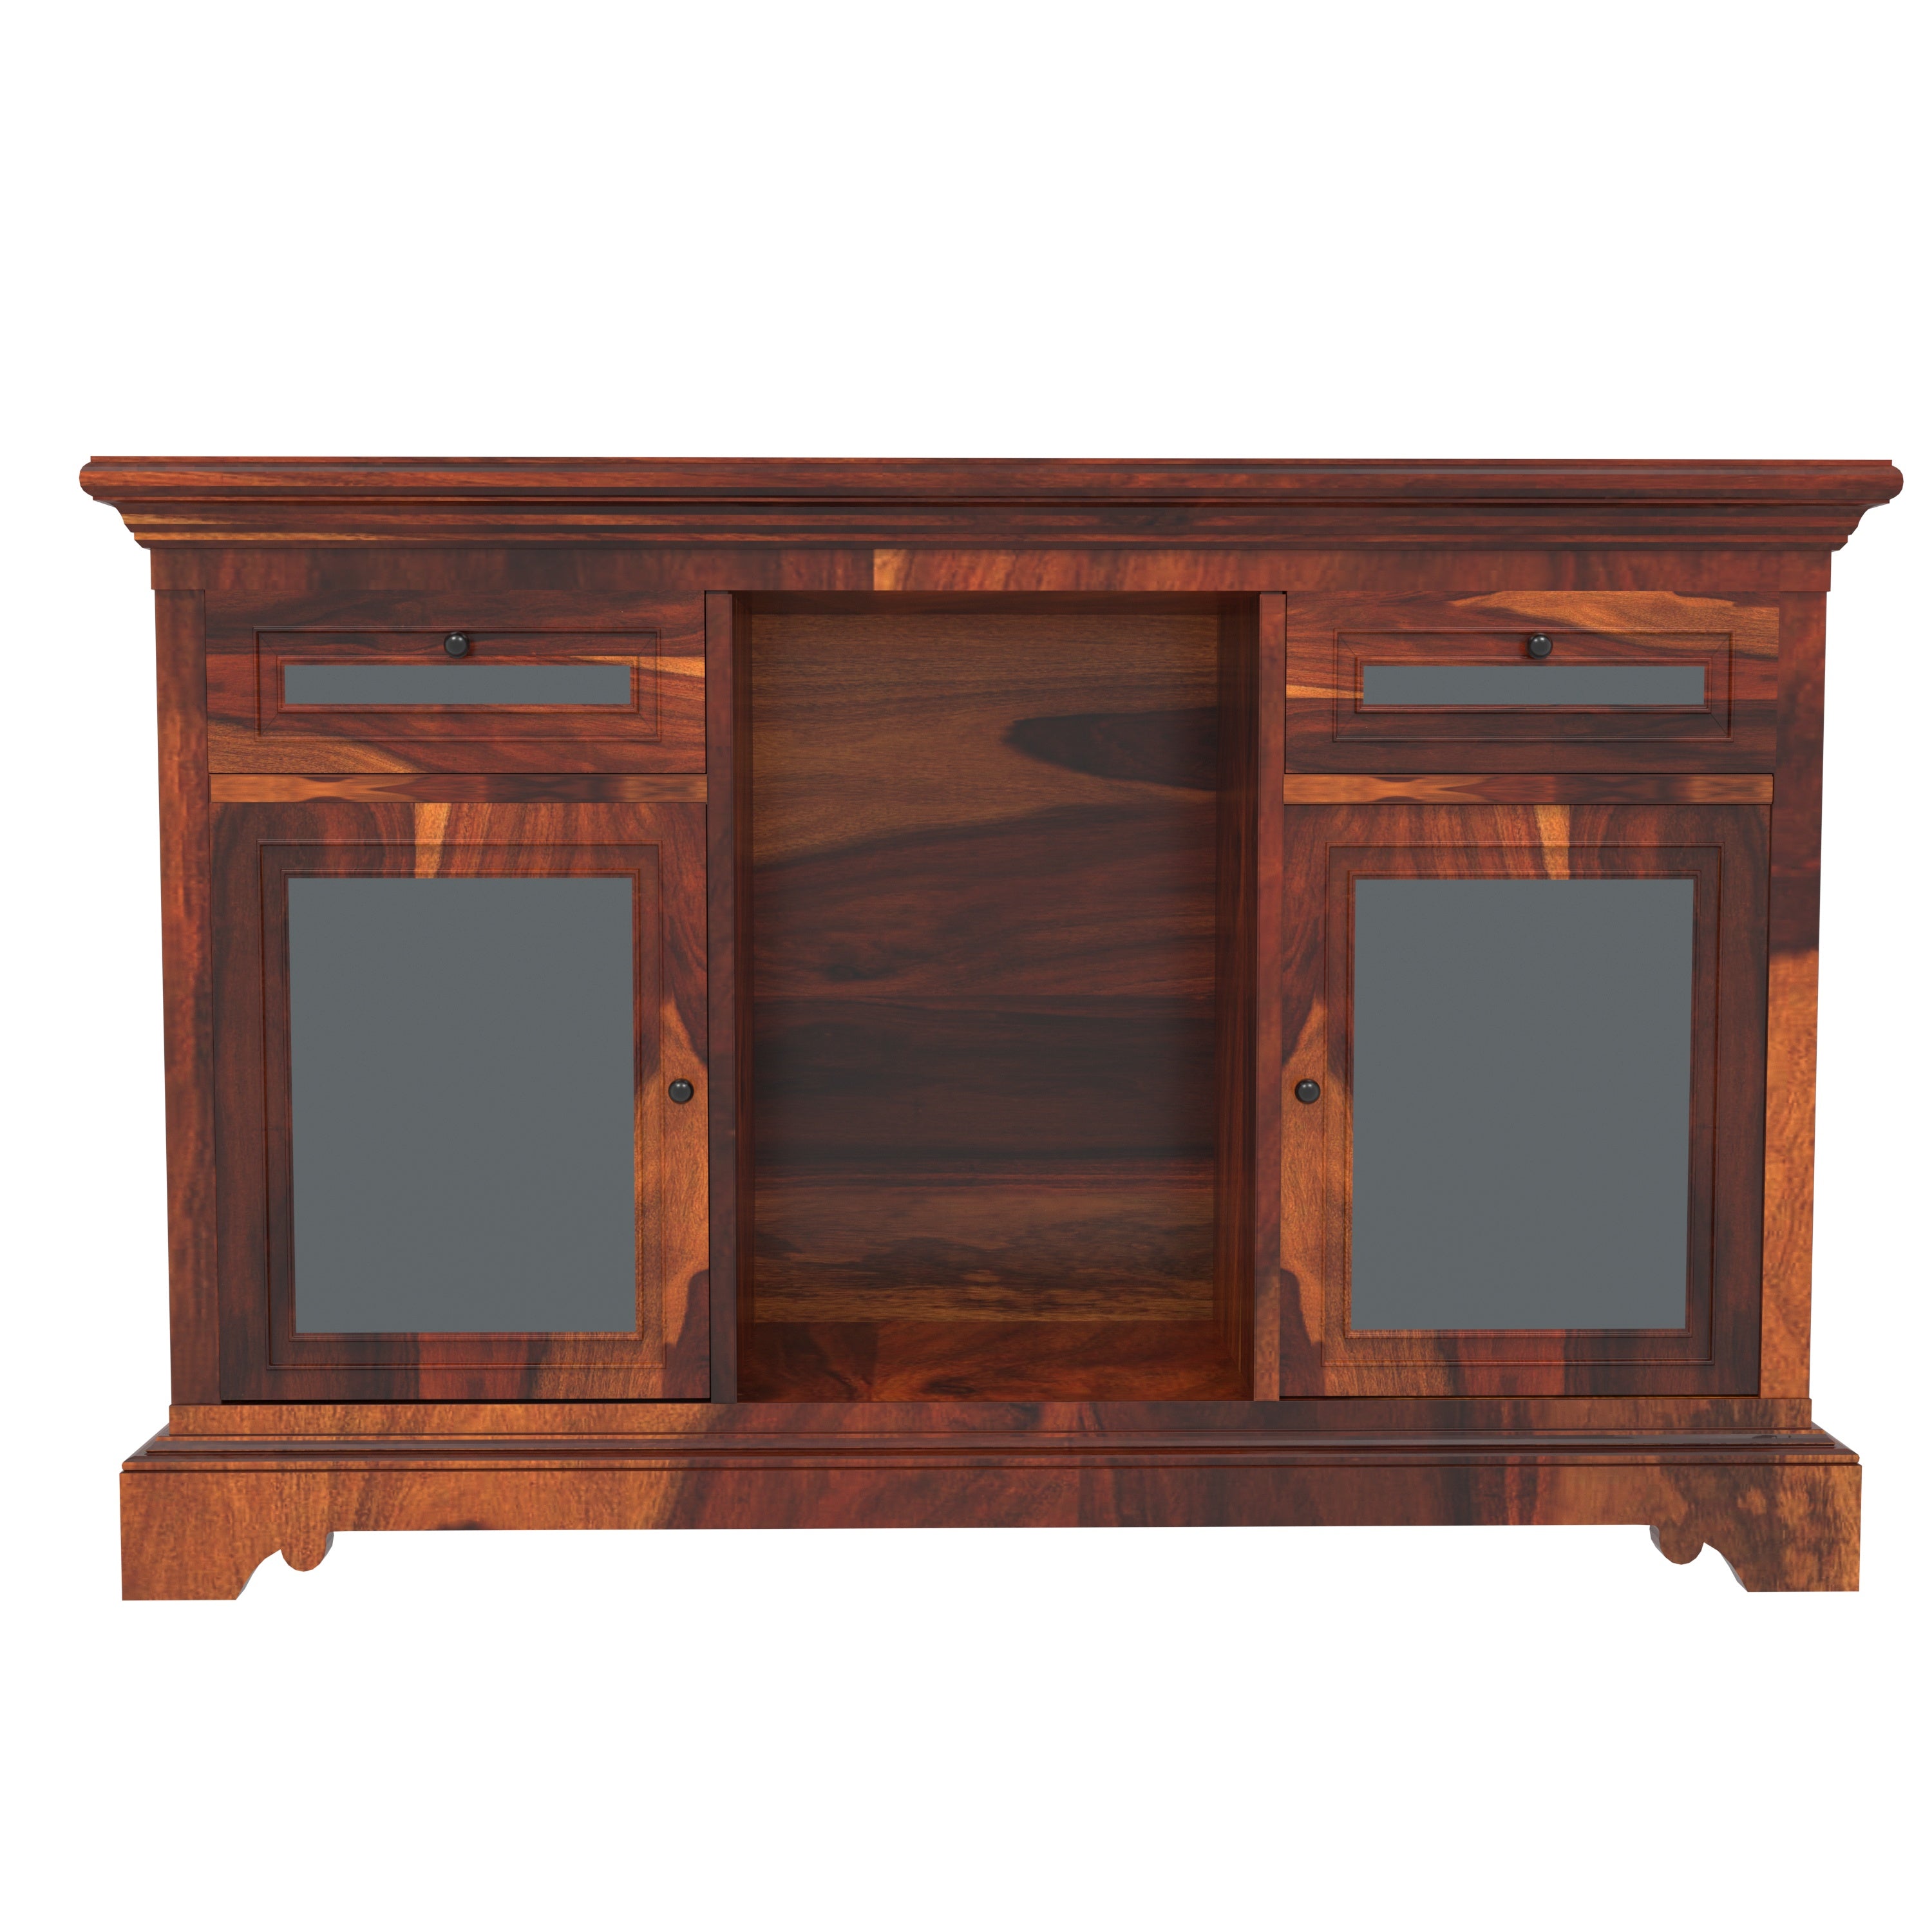 Southern Dark Sheesham Handmade Classic Wooden Sideboard for Home Cupboard